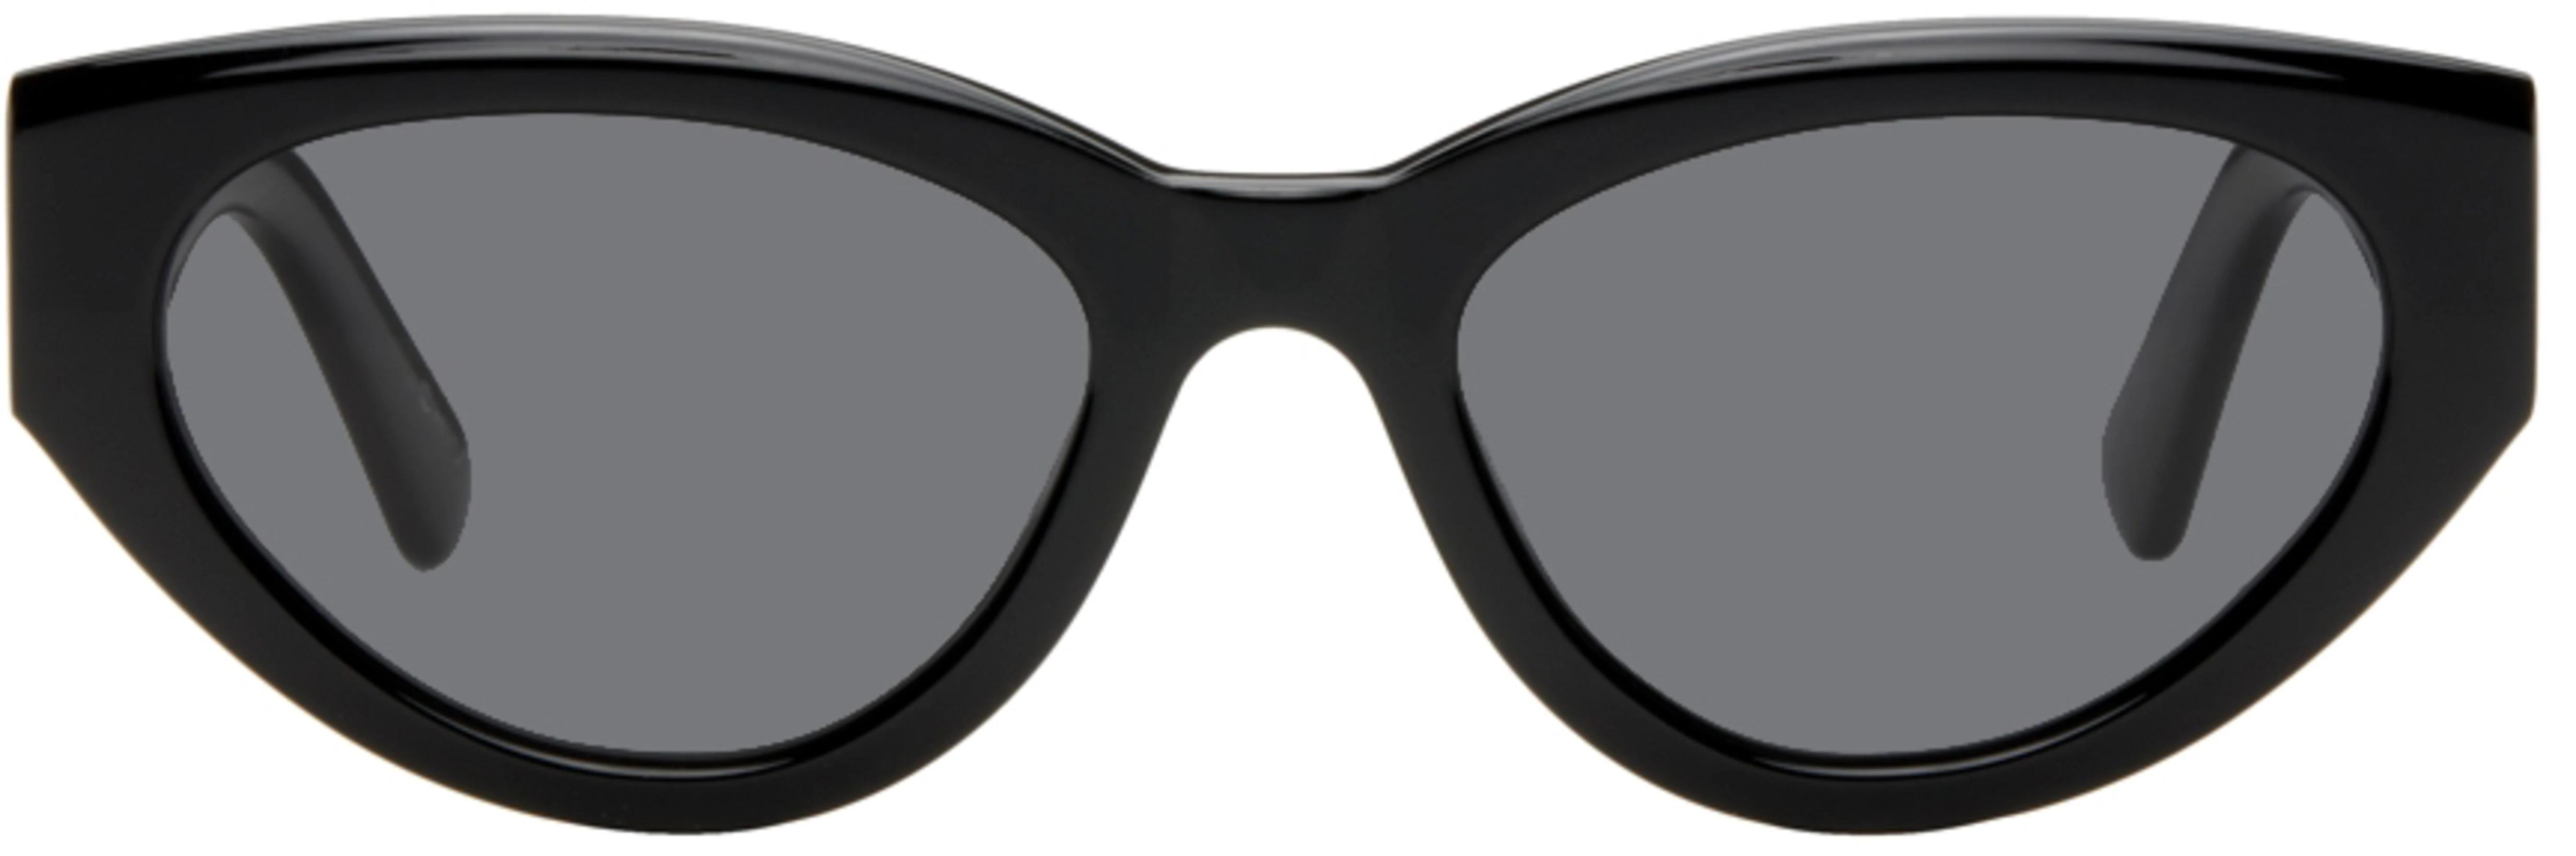 Black 06 Sunglasses by CHIMI